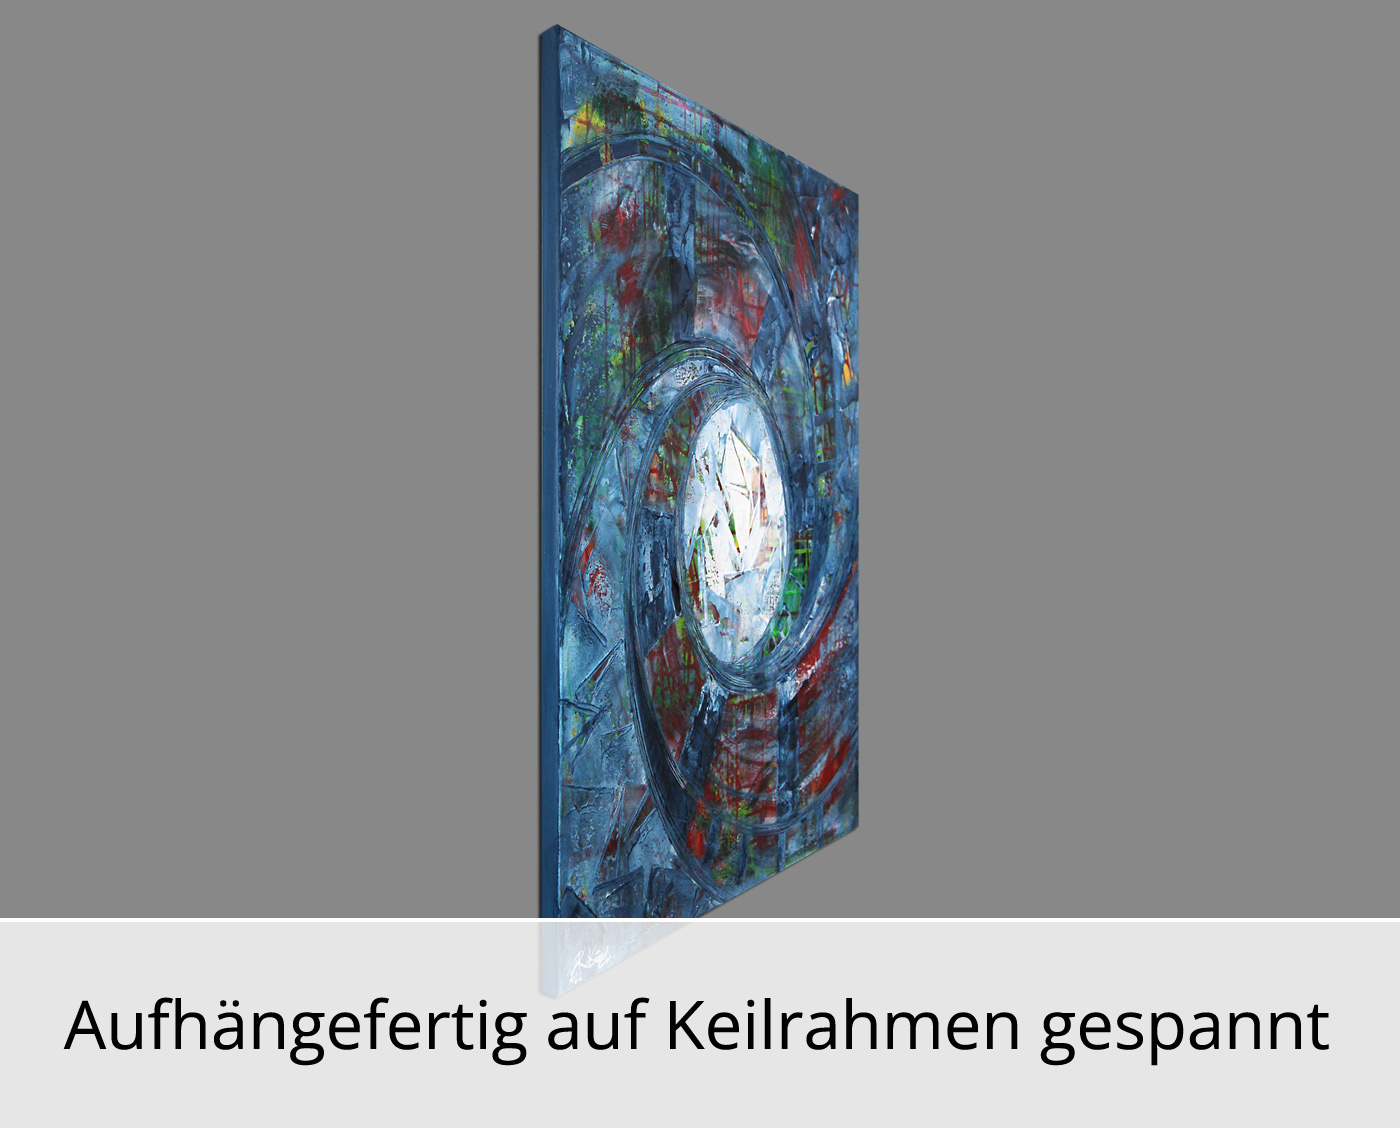 R. König: "Reifungsprozess II", abstraktes Originalgemälde (Unikat)